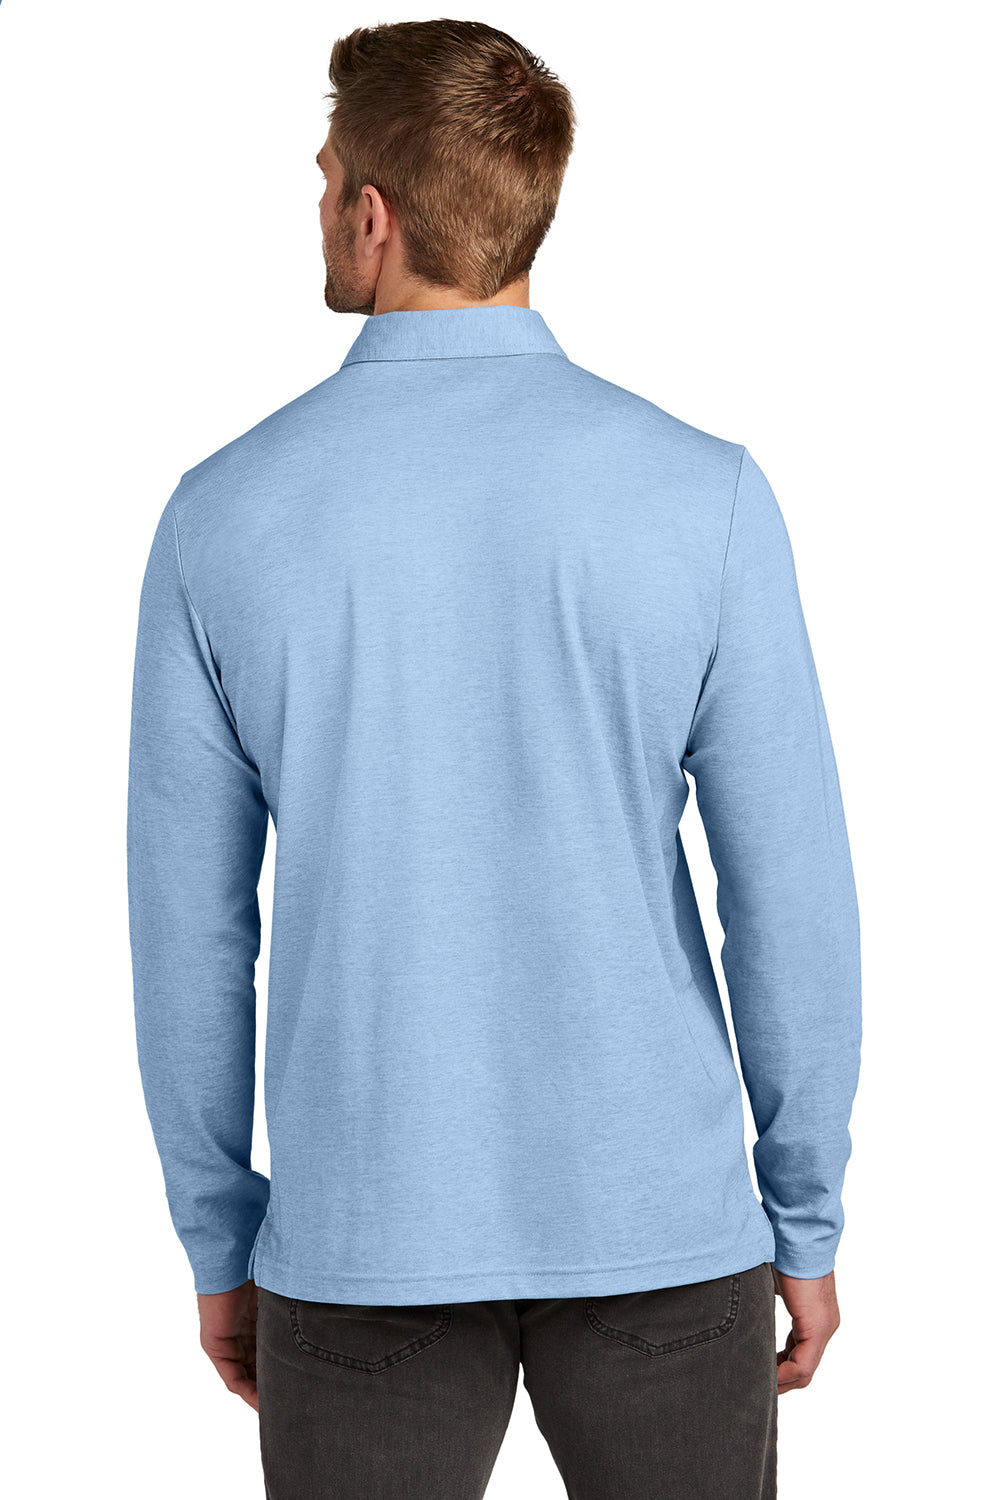 TravisMathew TM1MZ343 Mens Oceanside Moisture Wicking Long Sleeve Polo Shirt Heather Allure Blue Model Back